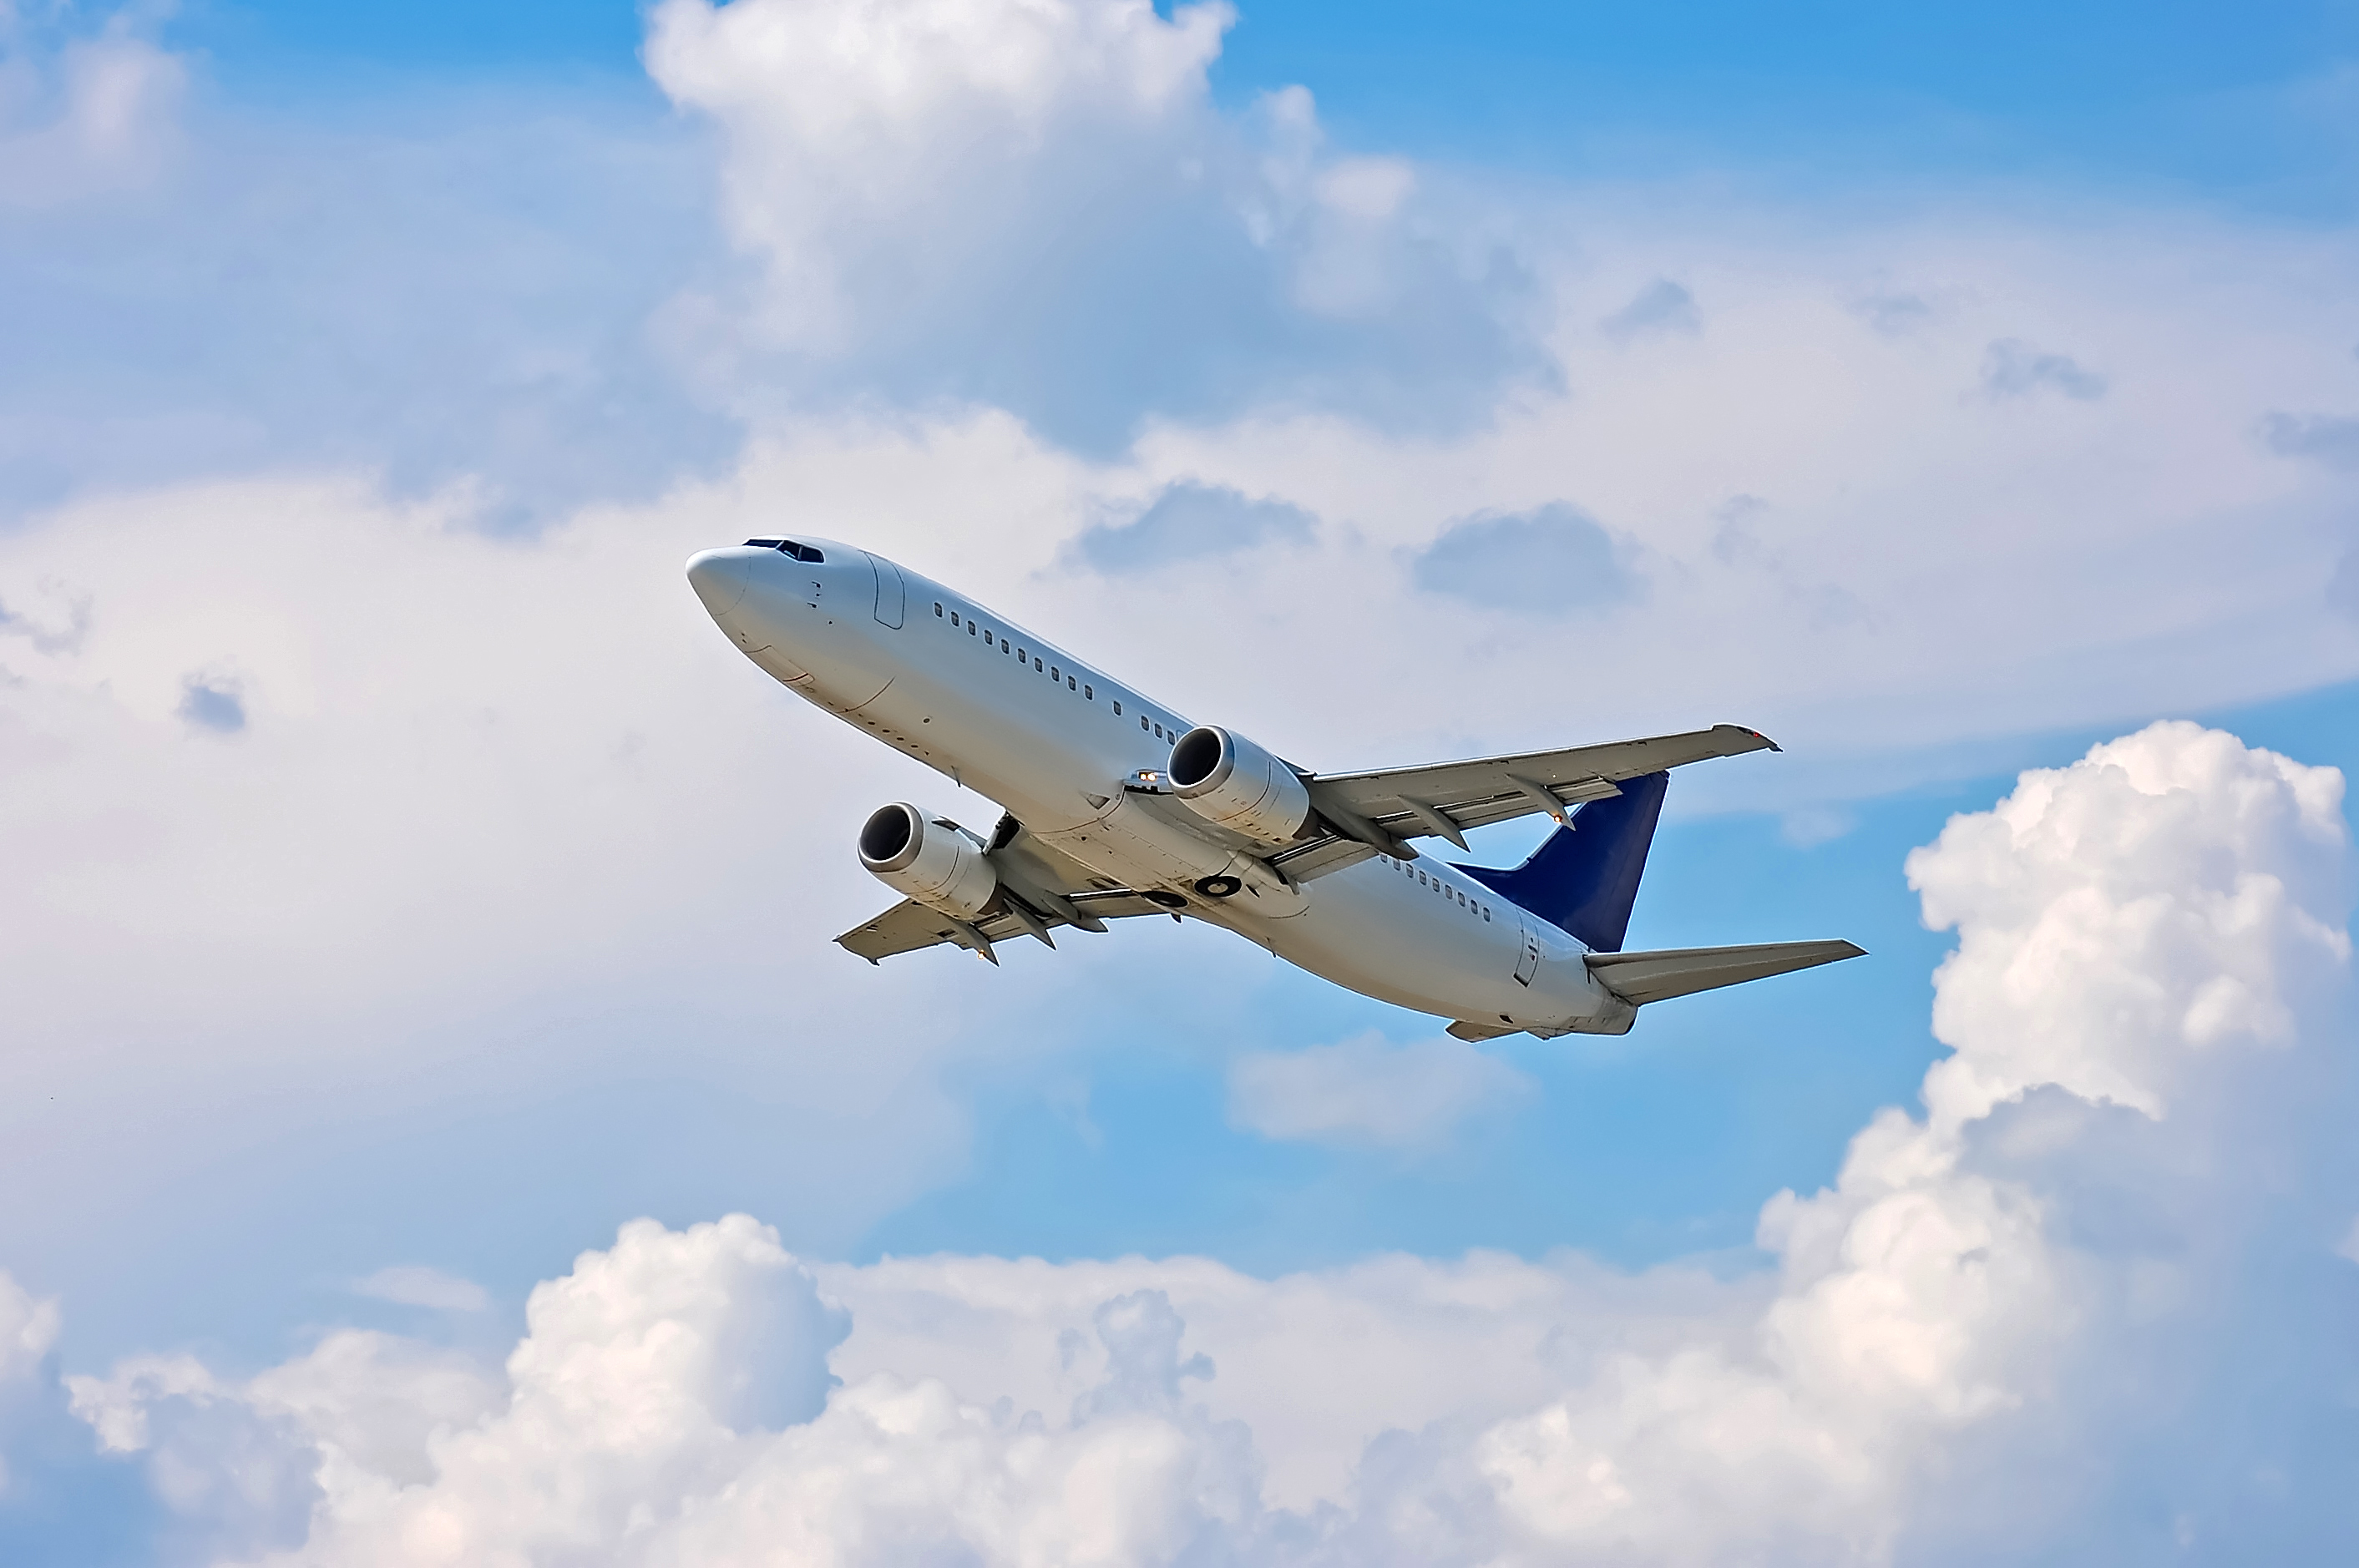 westpac altitude rewards airline partners